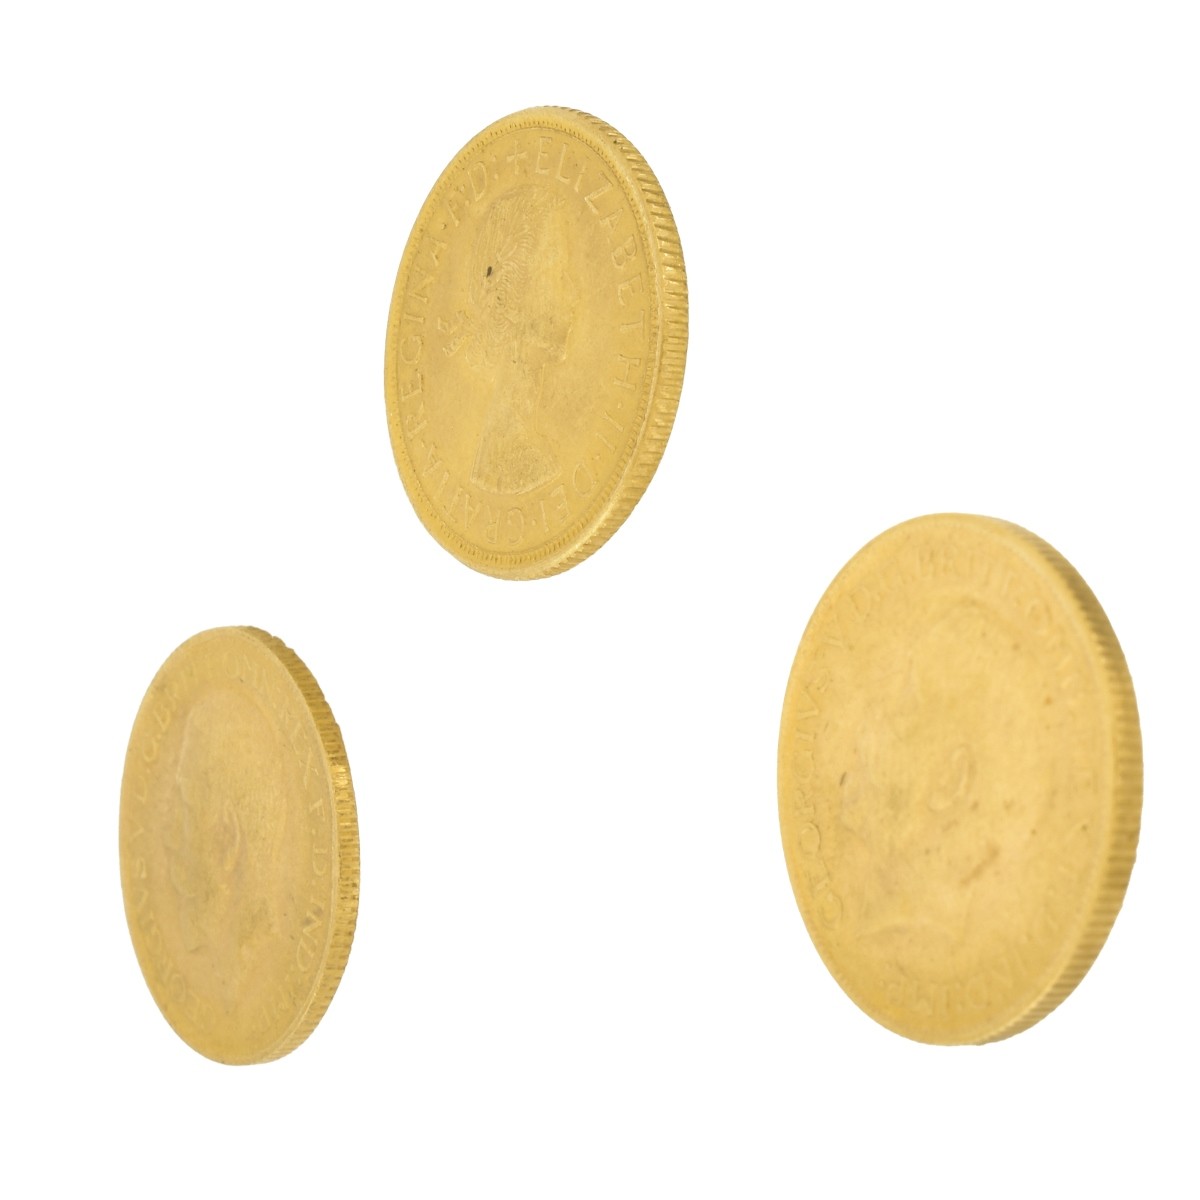 Three (3) British Gold Sovereigns